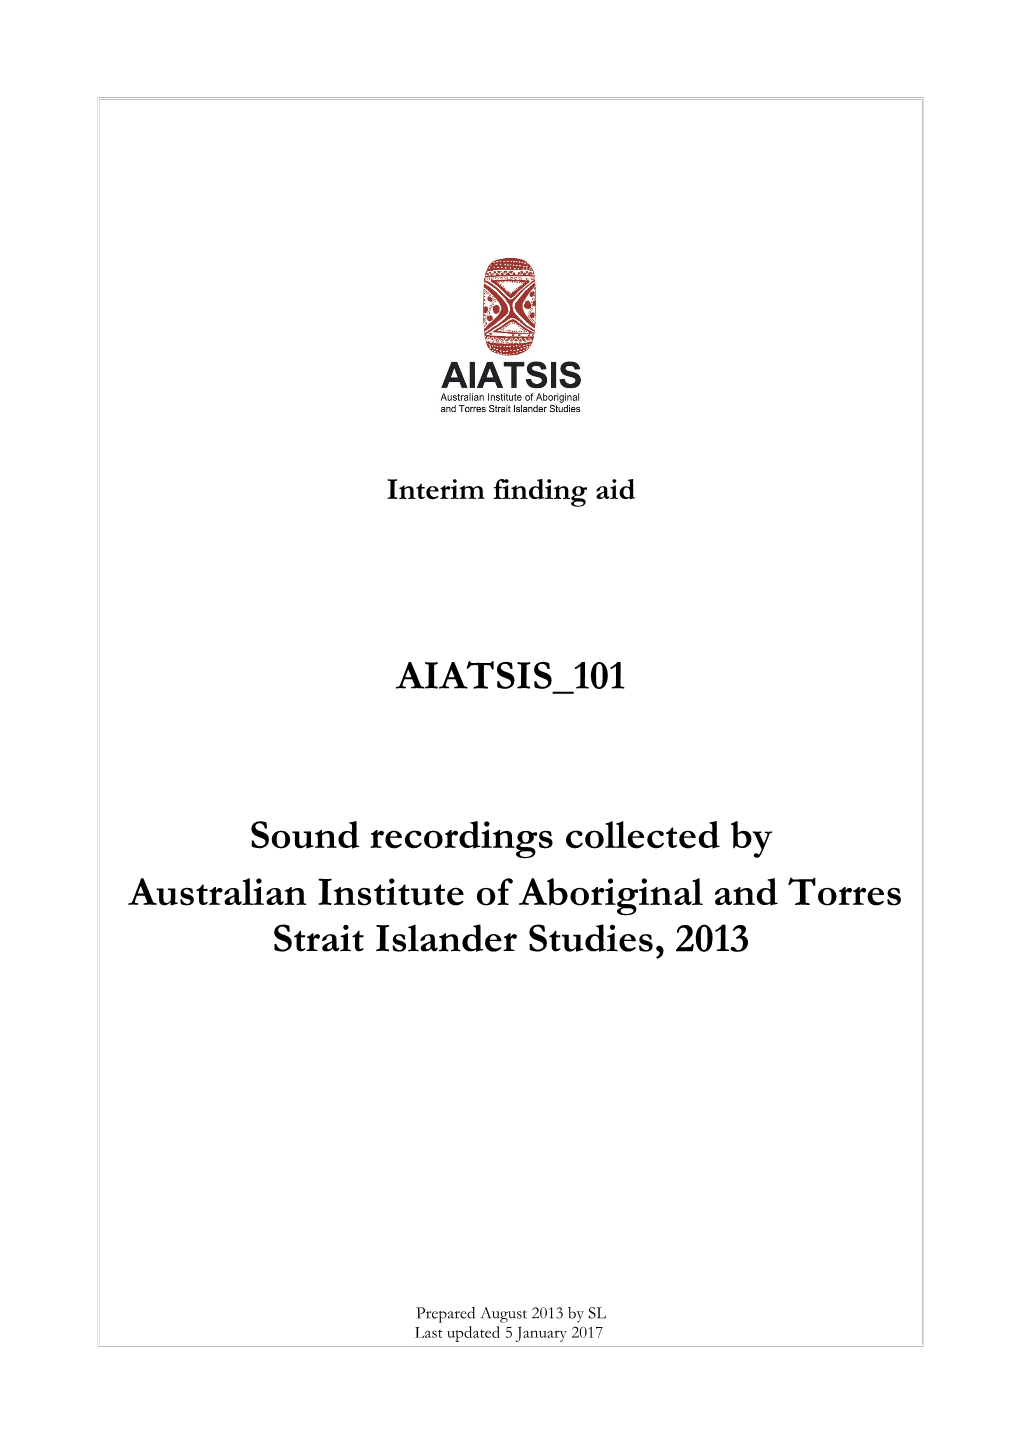 Sound Recordings Collected by Australian Institute of Aboriginal and Torres Strait Islander Studies, 2013